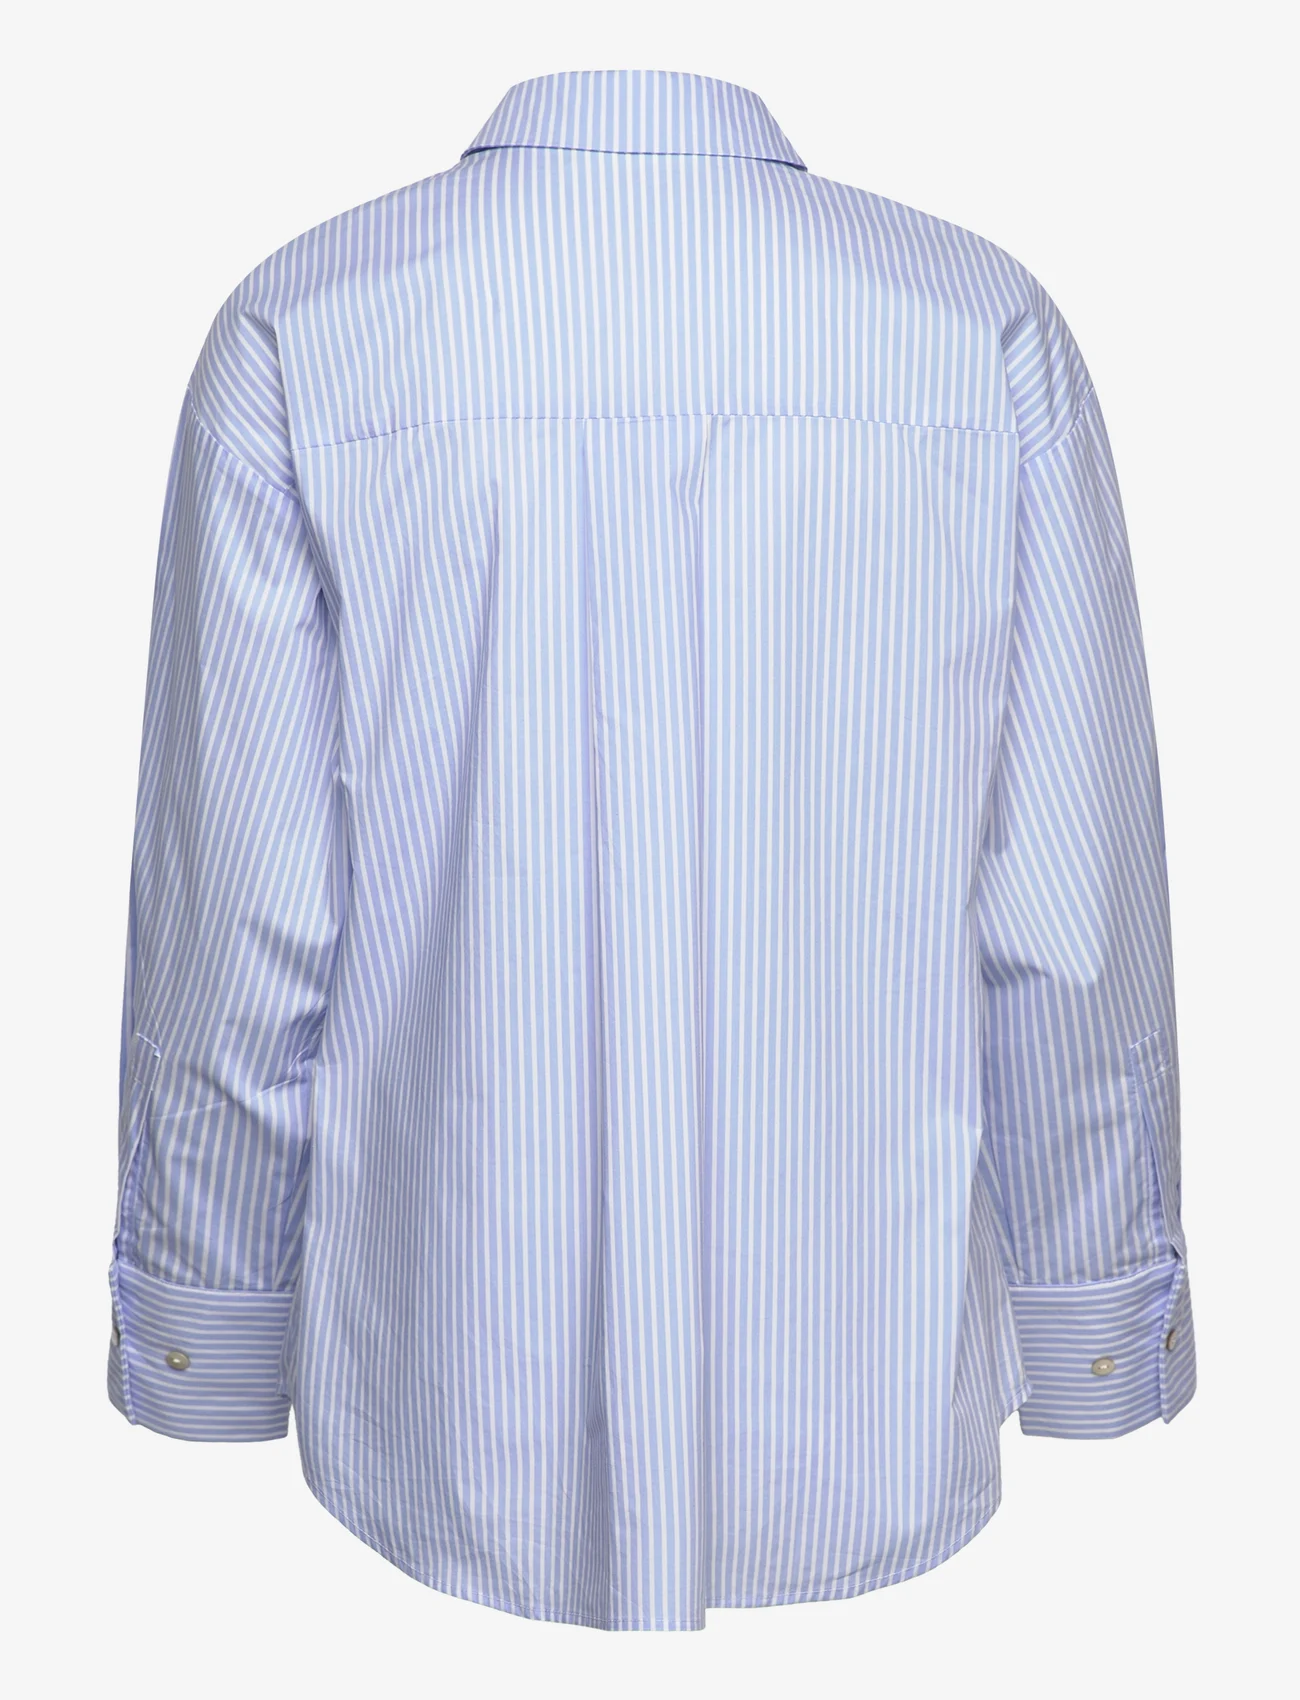 Sofie Schnoor - Shirt - long-sleeved shirts - light blue striped - 1